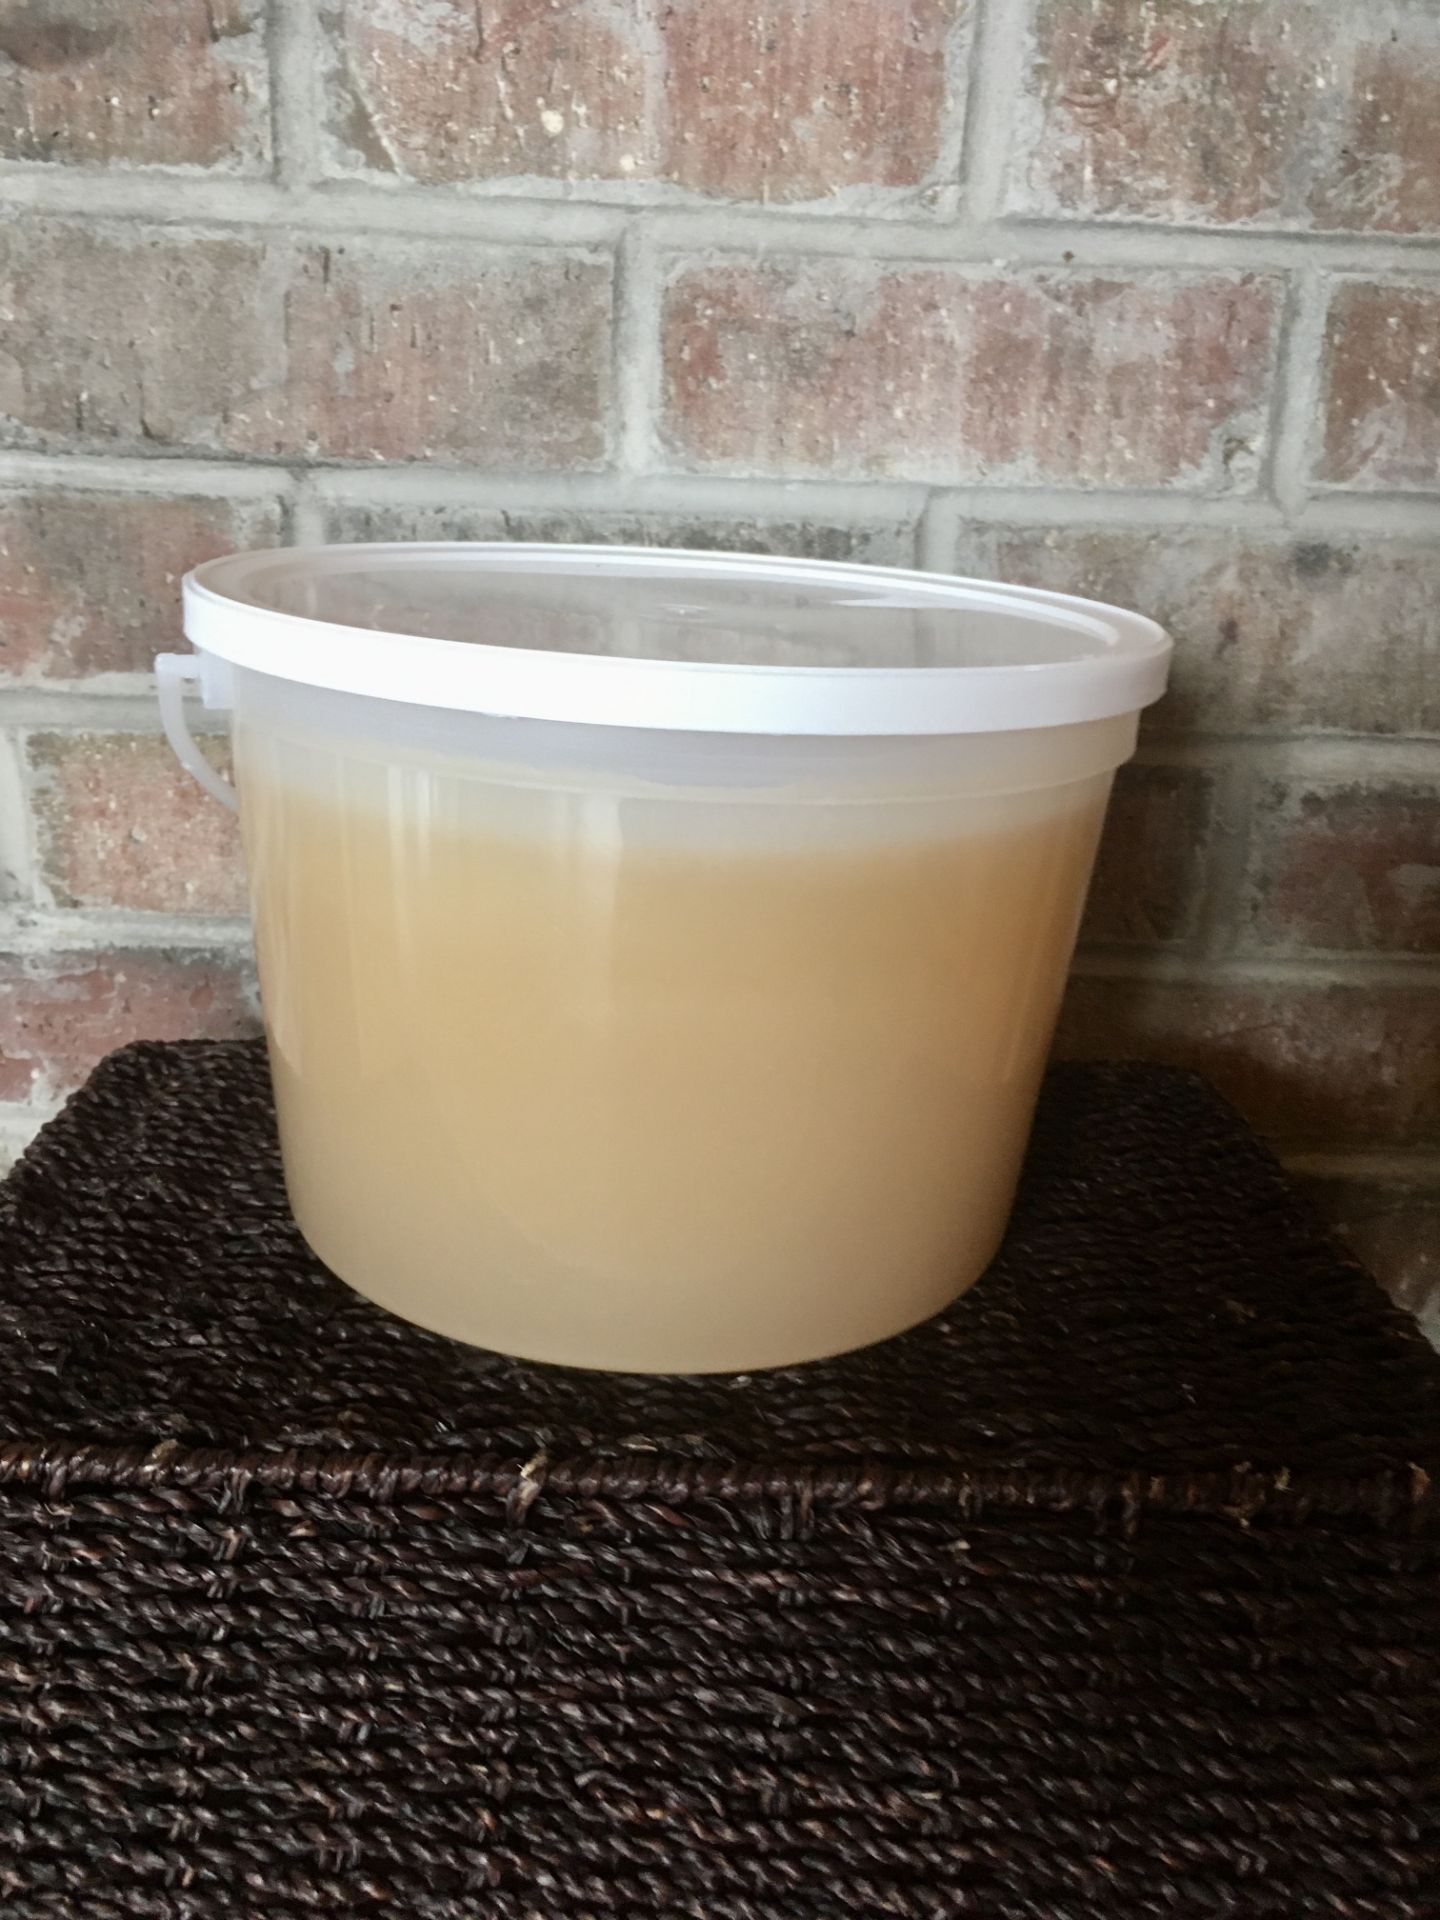 10 LBS OF DEWAR APIARIES HONEY 4 litre pail full of local honey! Donated by: Dewar Apiaries. - Image 2 of 2